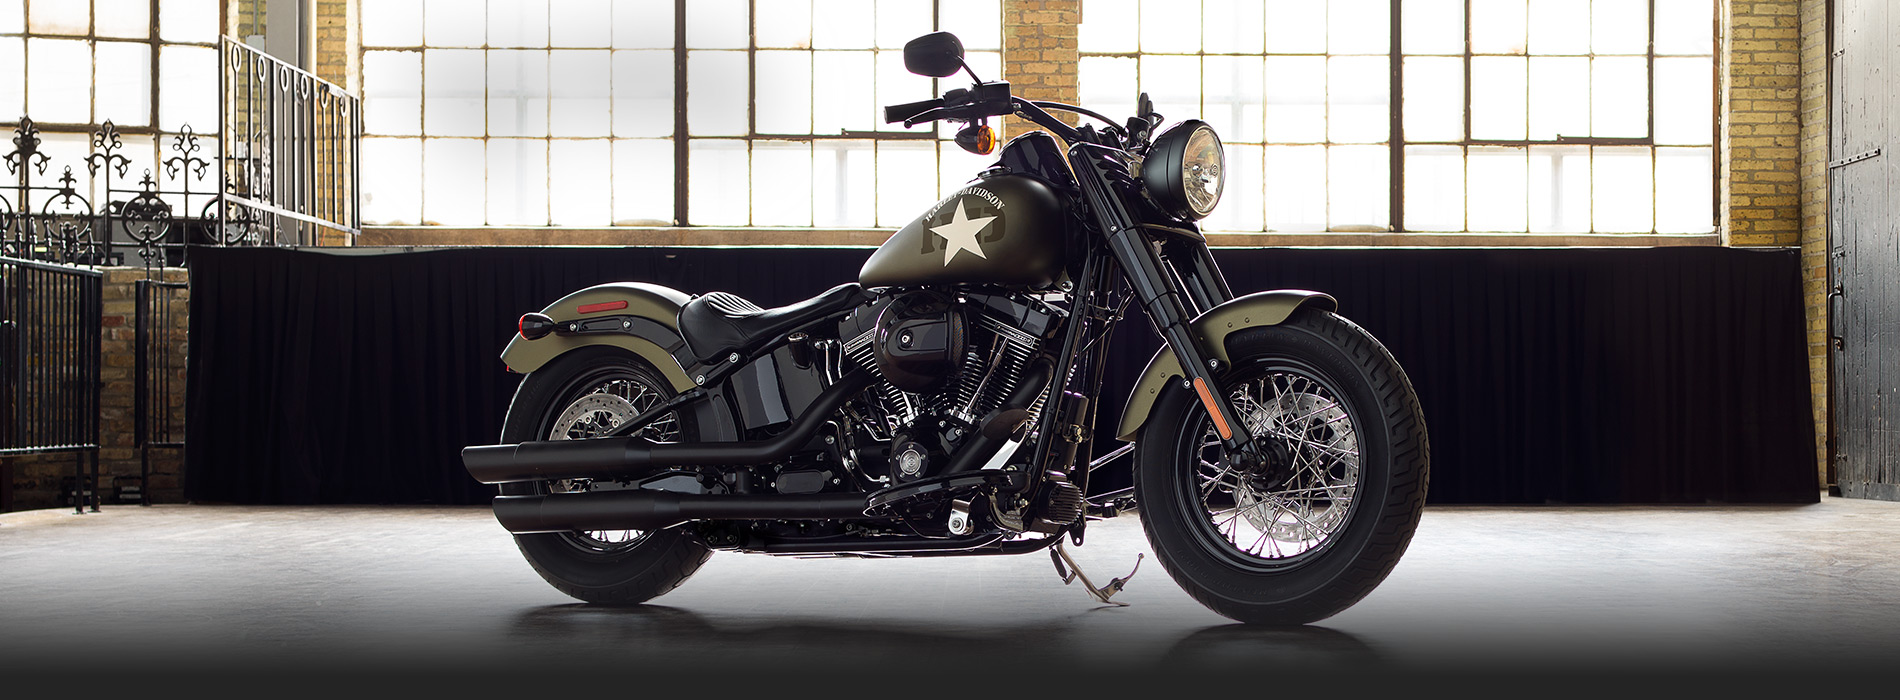 Noul Harley Davidson Softail Slim S Omagiu Adus Wla 45